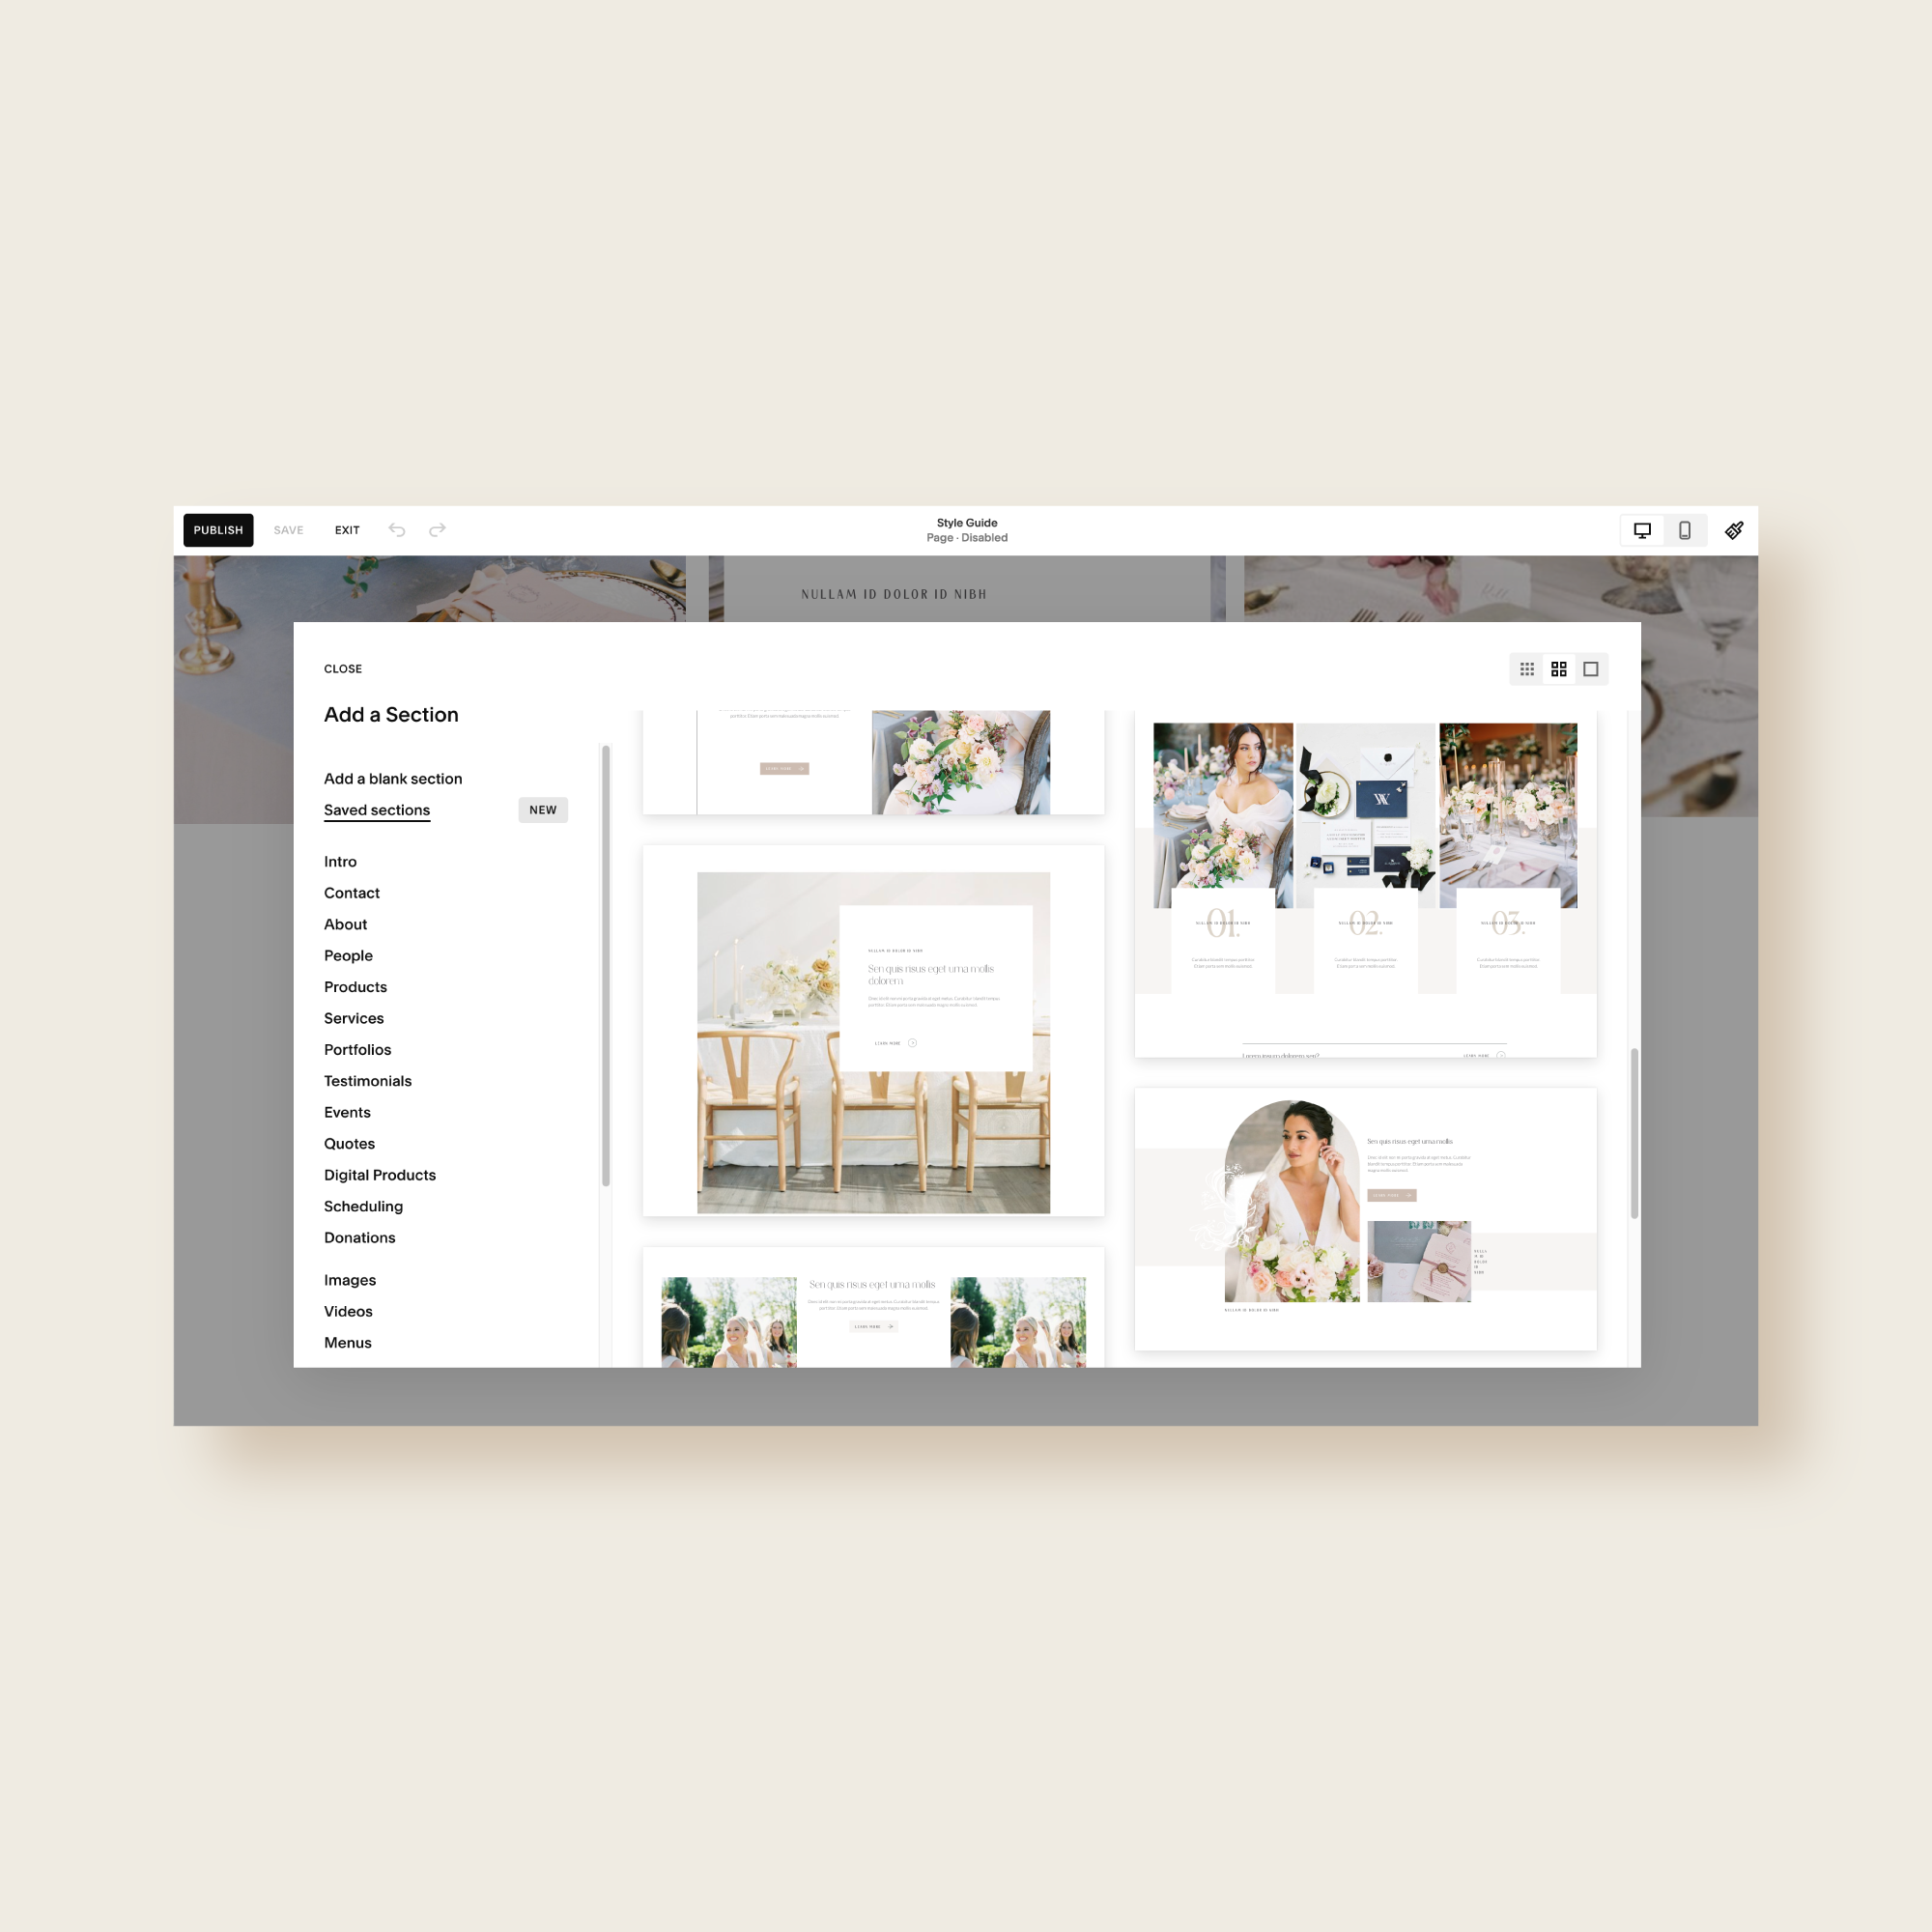 Swoon Floral Design’s website backend